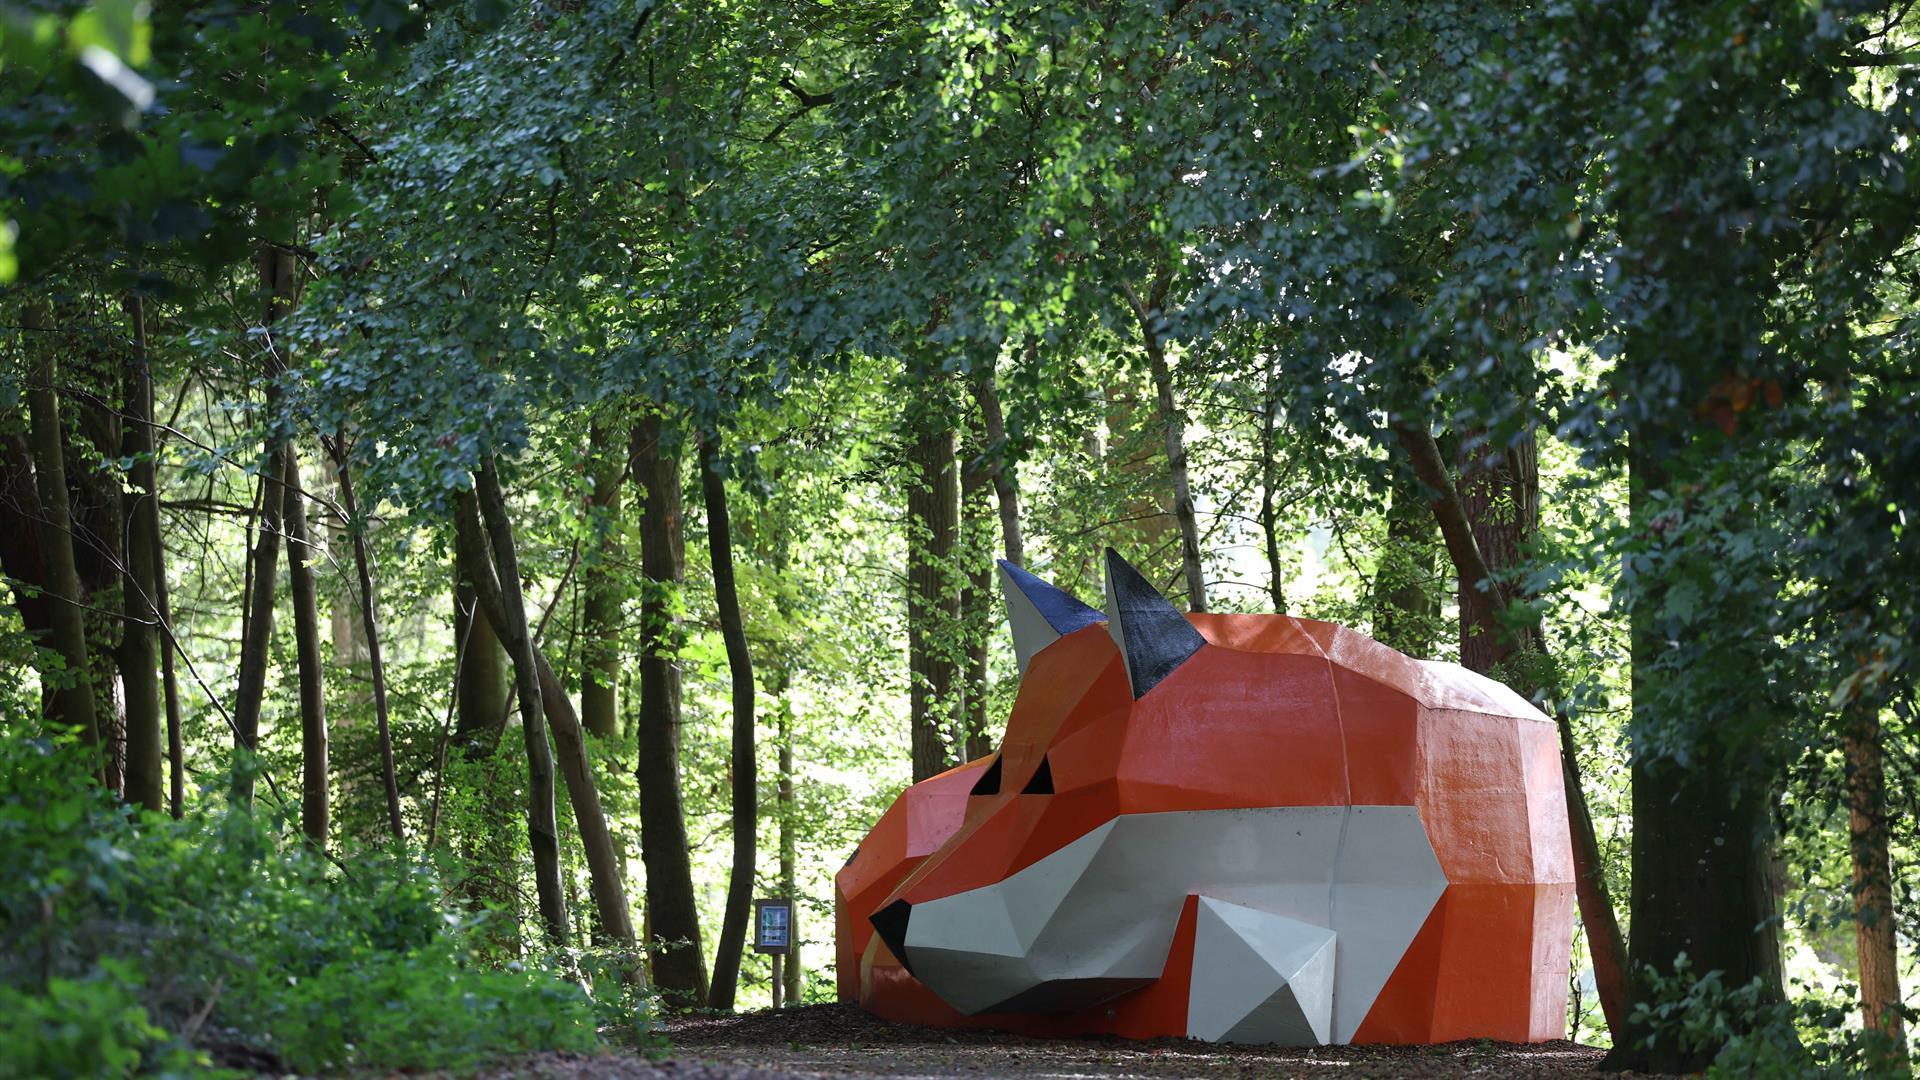 Rusty the Fox sculpture in Hillsborough Forest Park